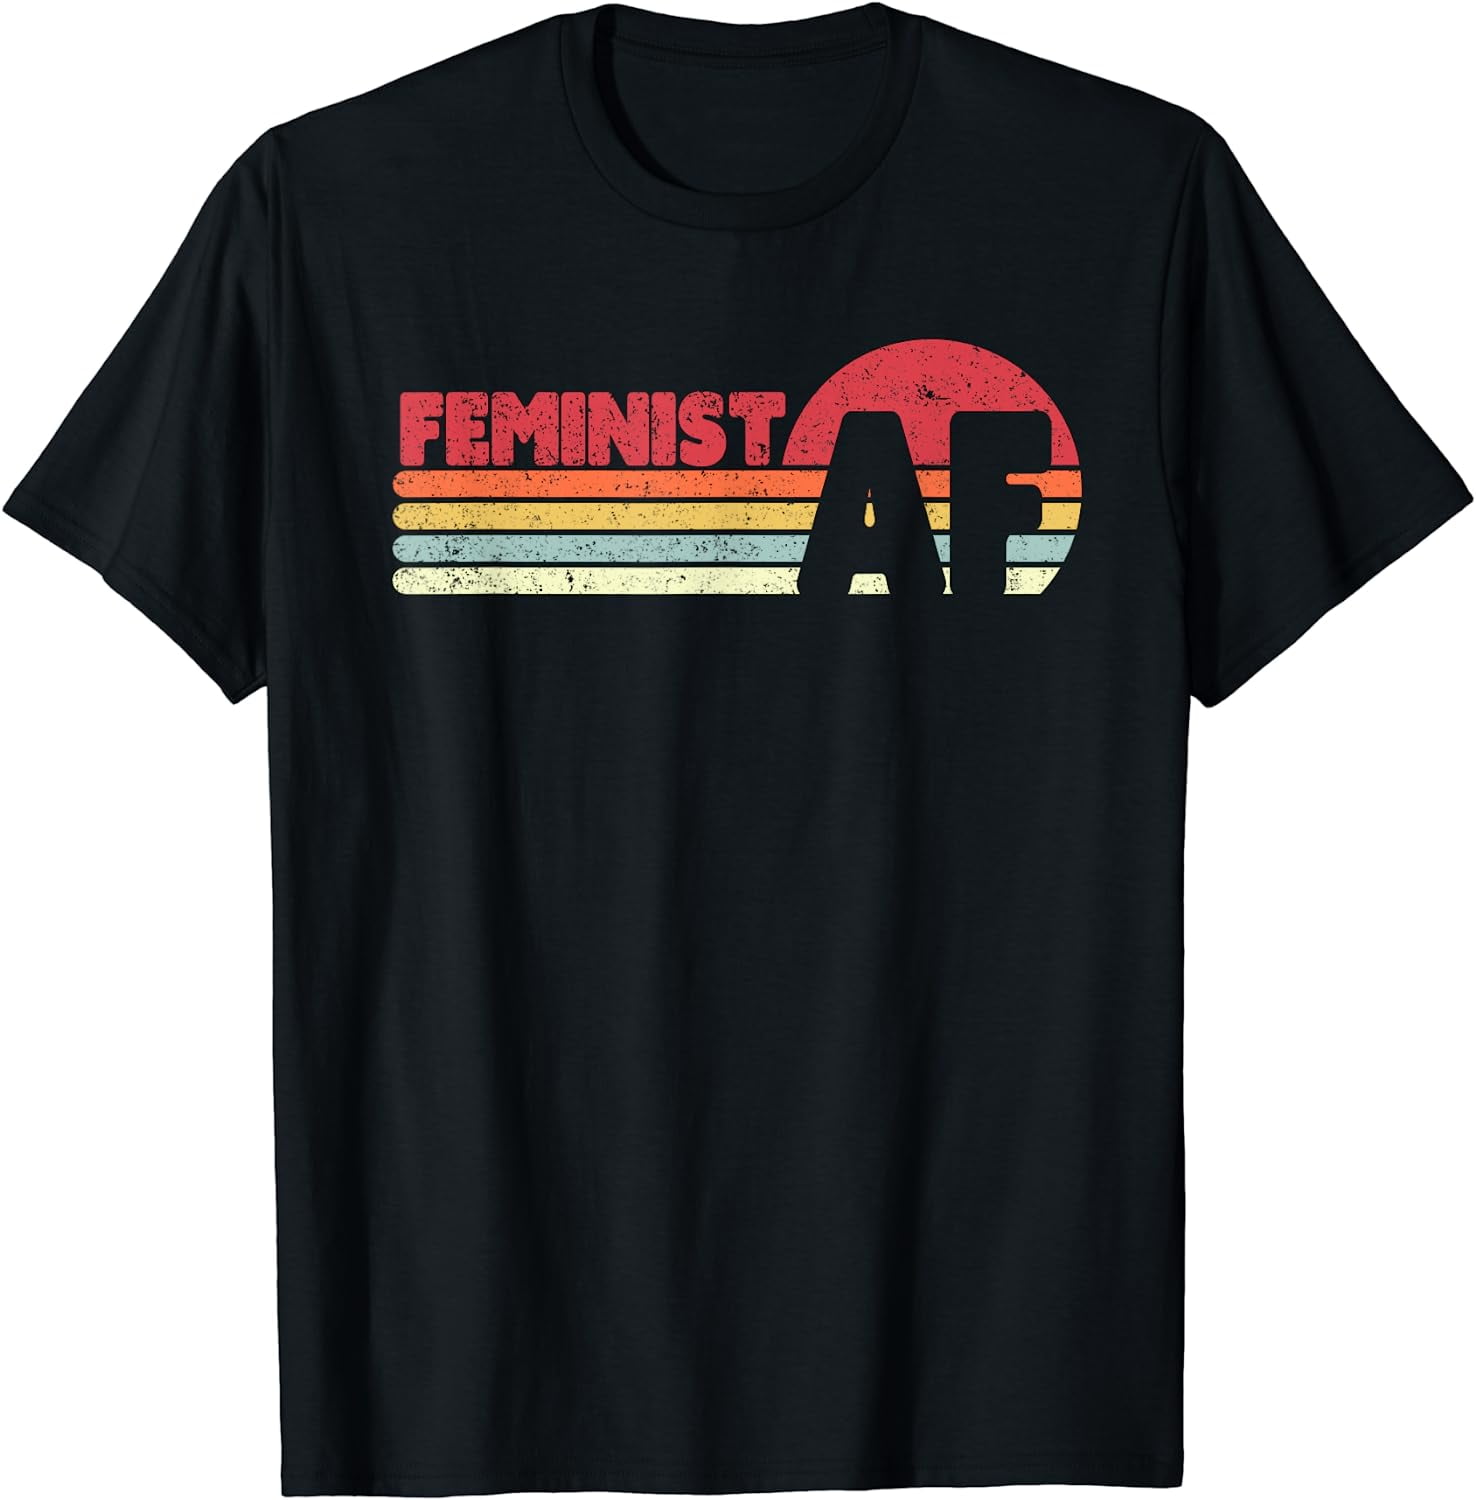 Feminist AF T Shirt. Retro, Vintage 70's Feminism Shirt. - Walmart.com